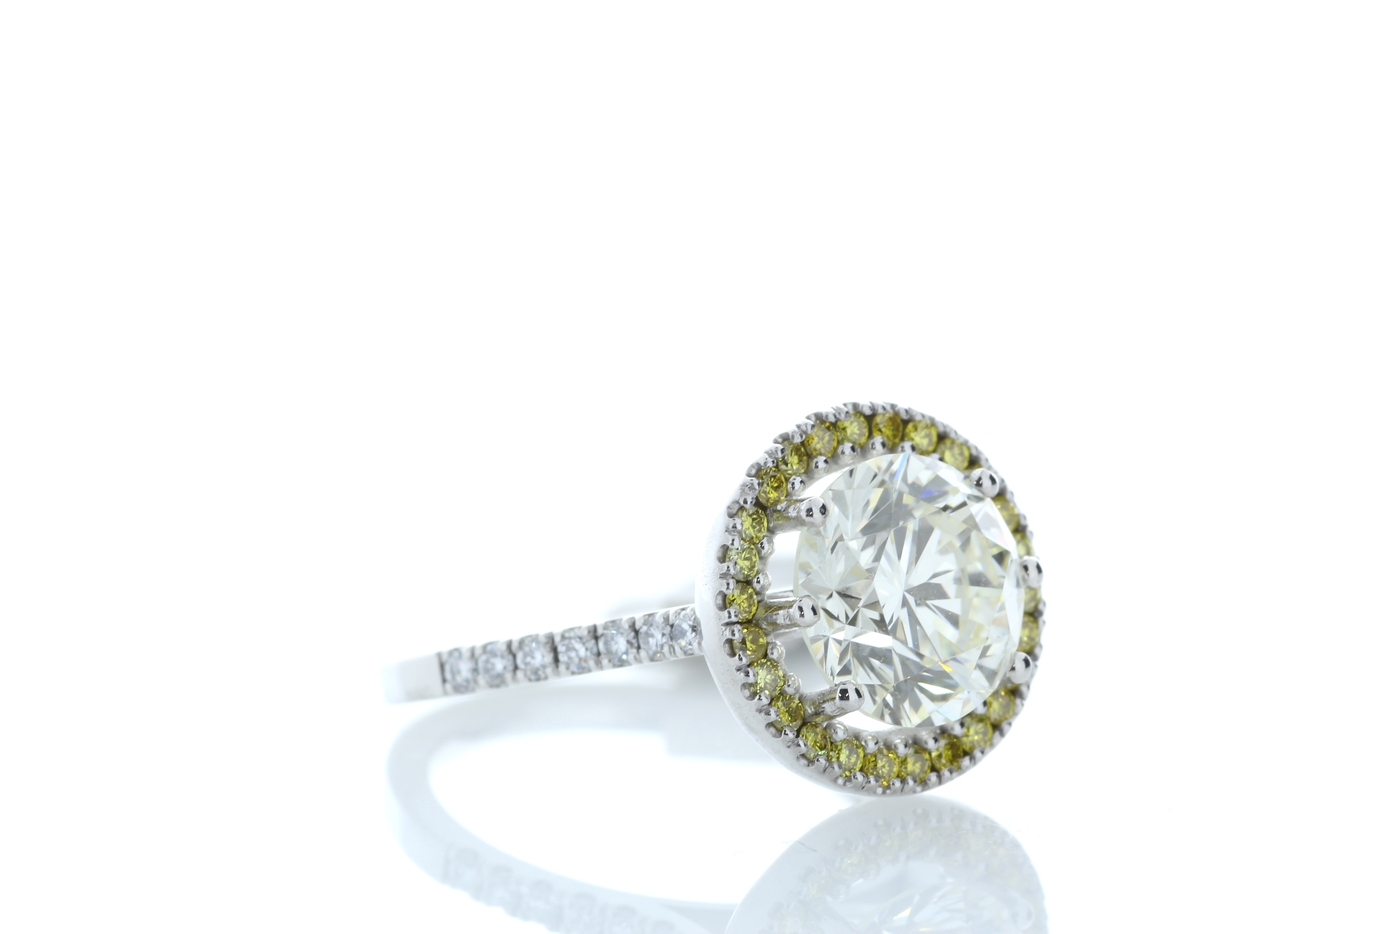 18ct White Gold Halo Set Diamond Ring 3.43 Carats - Image 4 of 5